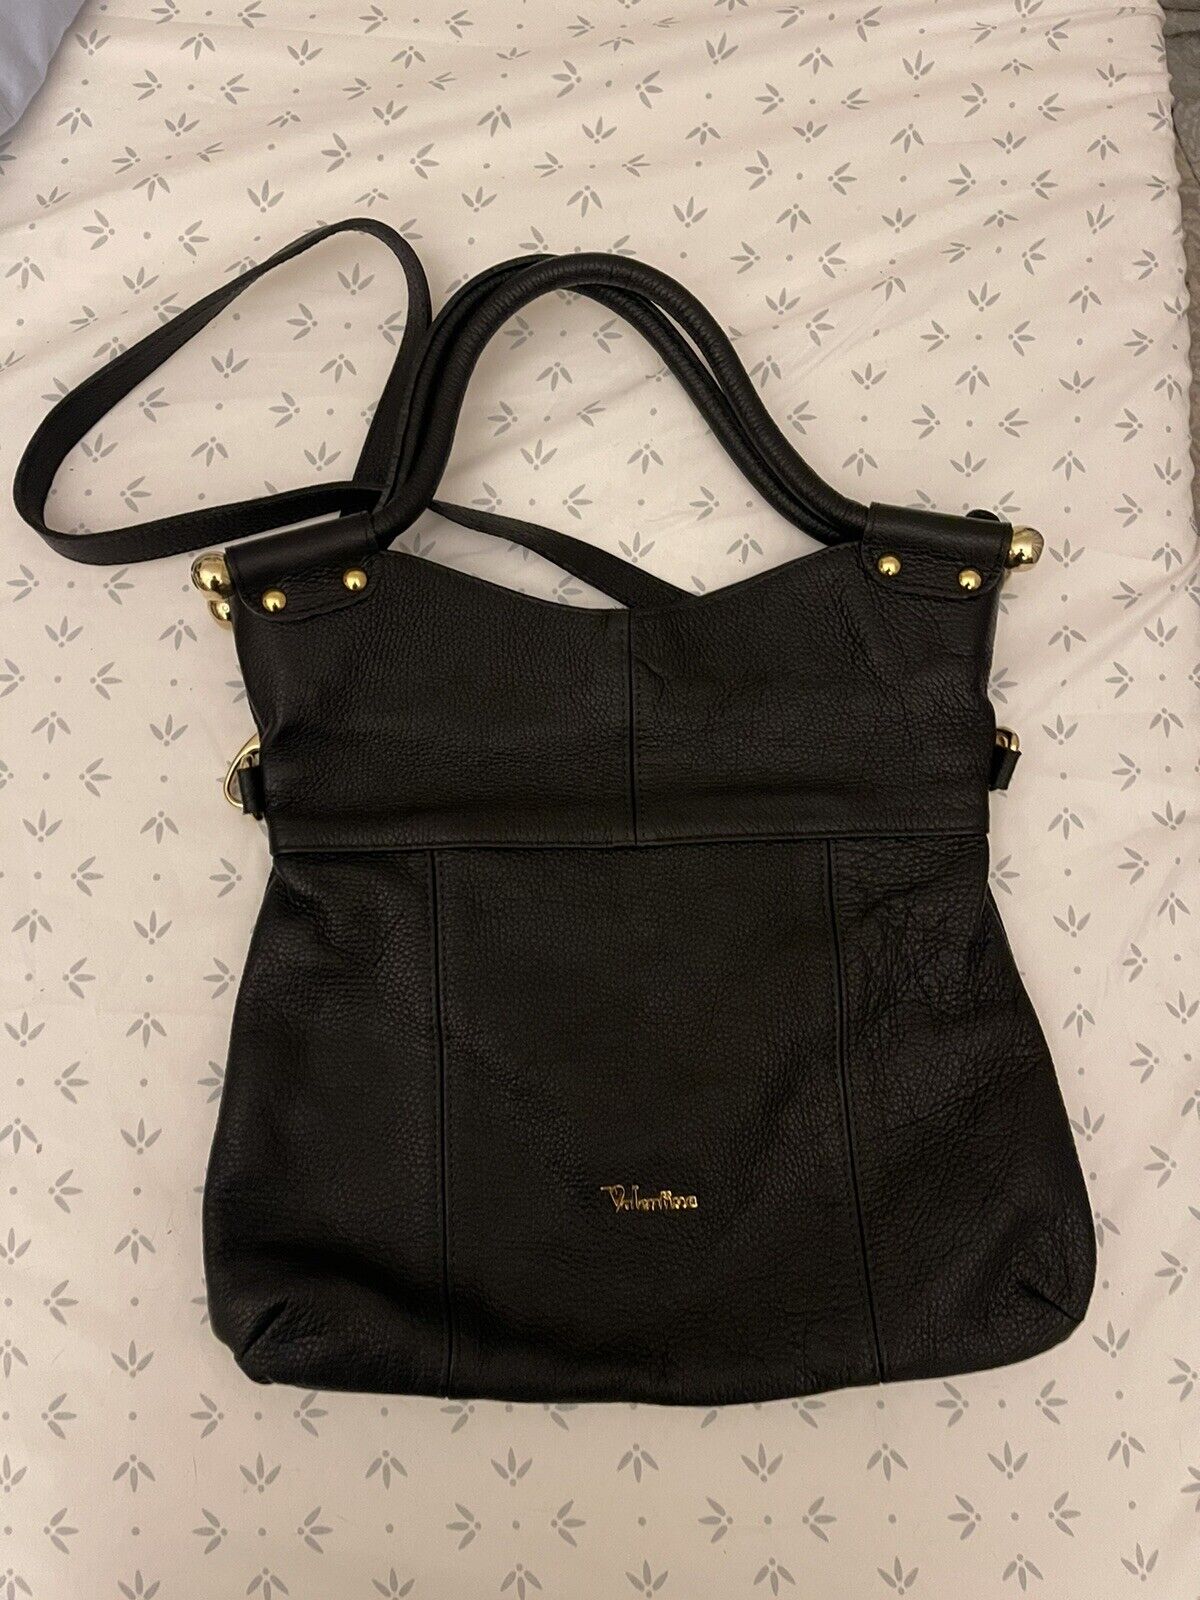 Valentina black leather gold purse - image 1